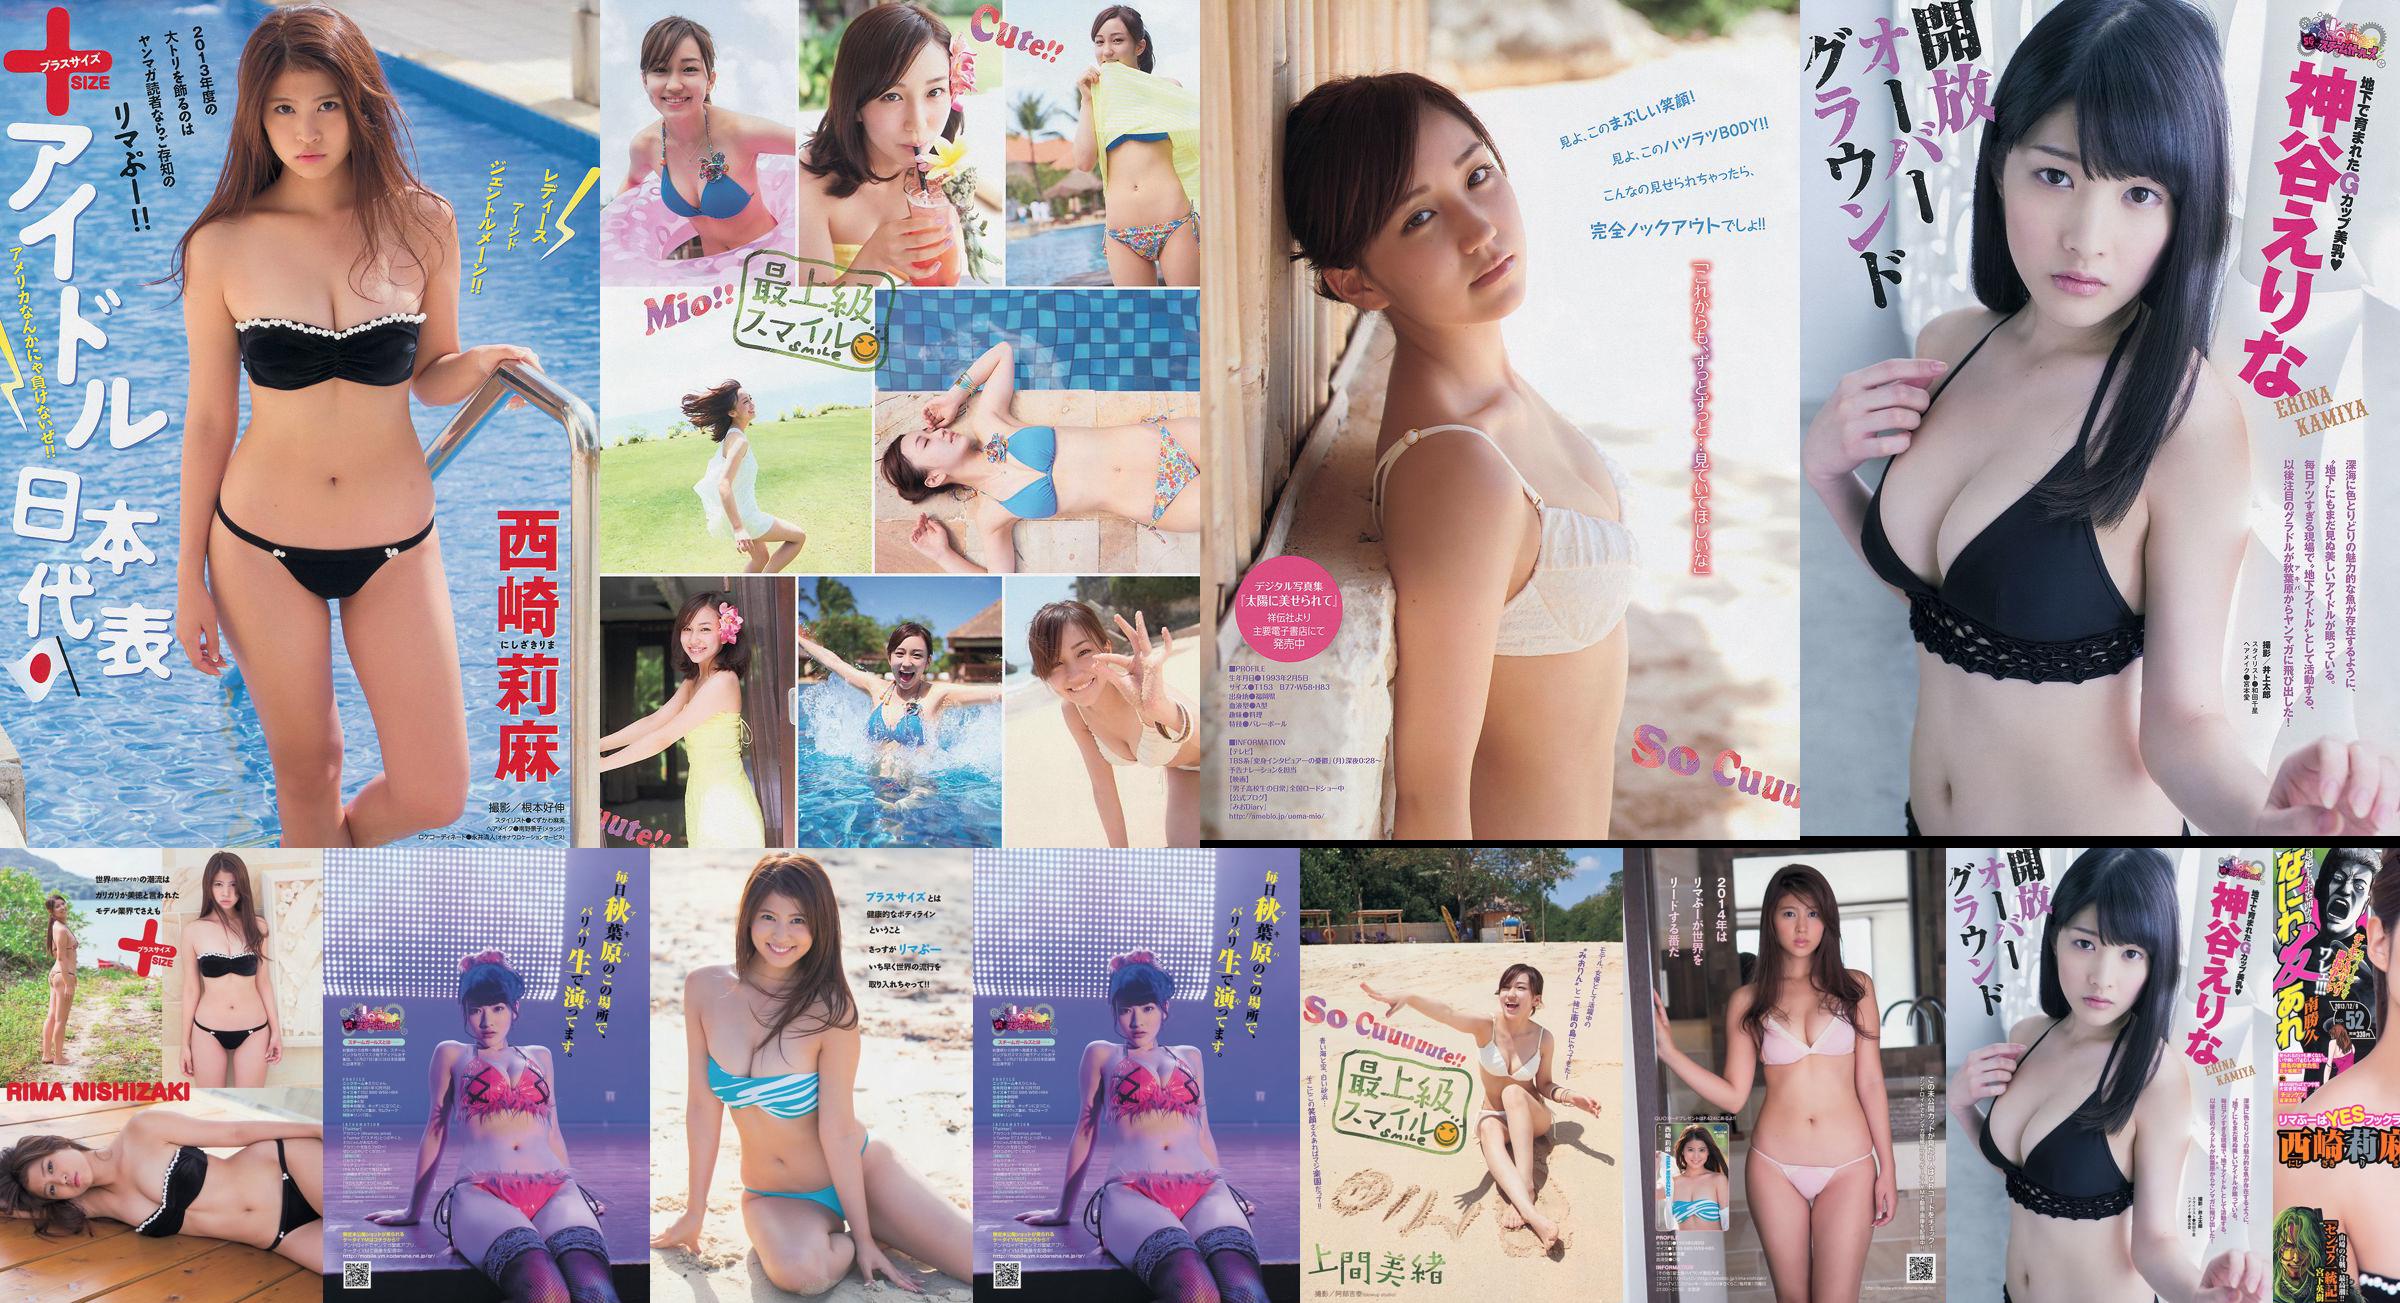 [Young Magazine] Rima Nishizaki Mio Uema Erina Kamiya 2013 No.52 Photo Moshi No.1ad66a Page 1